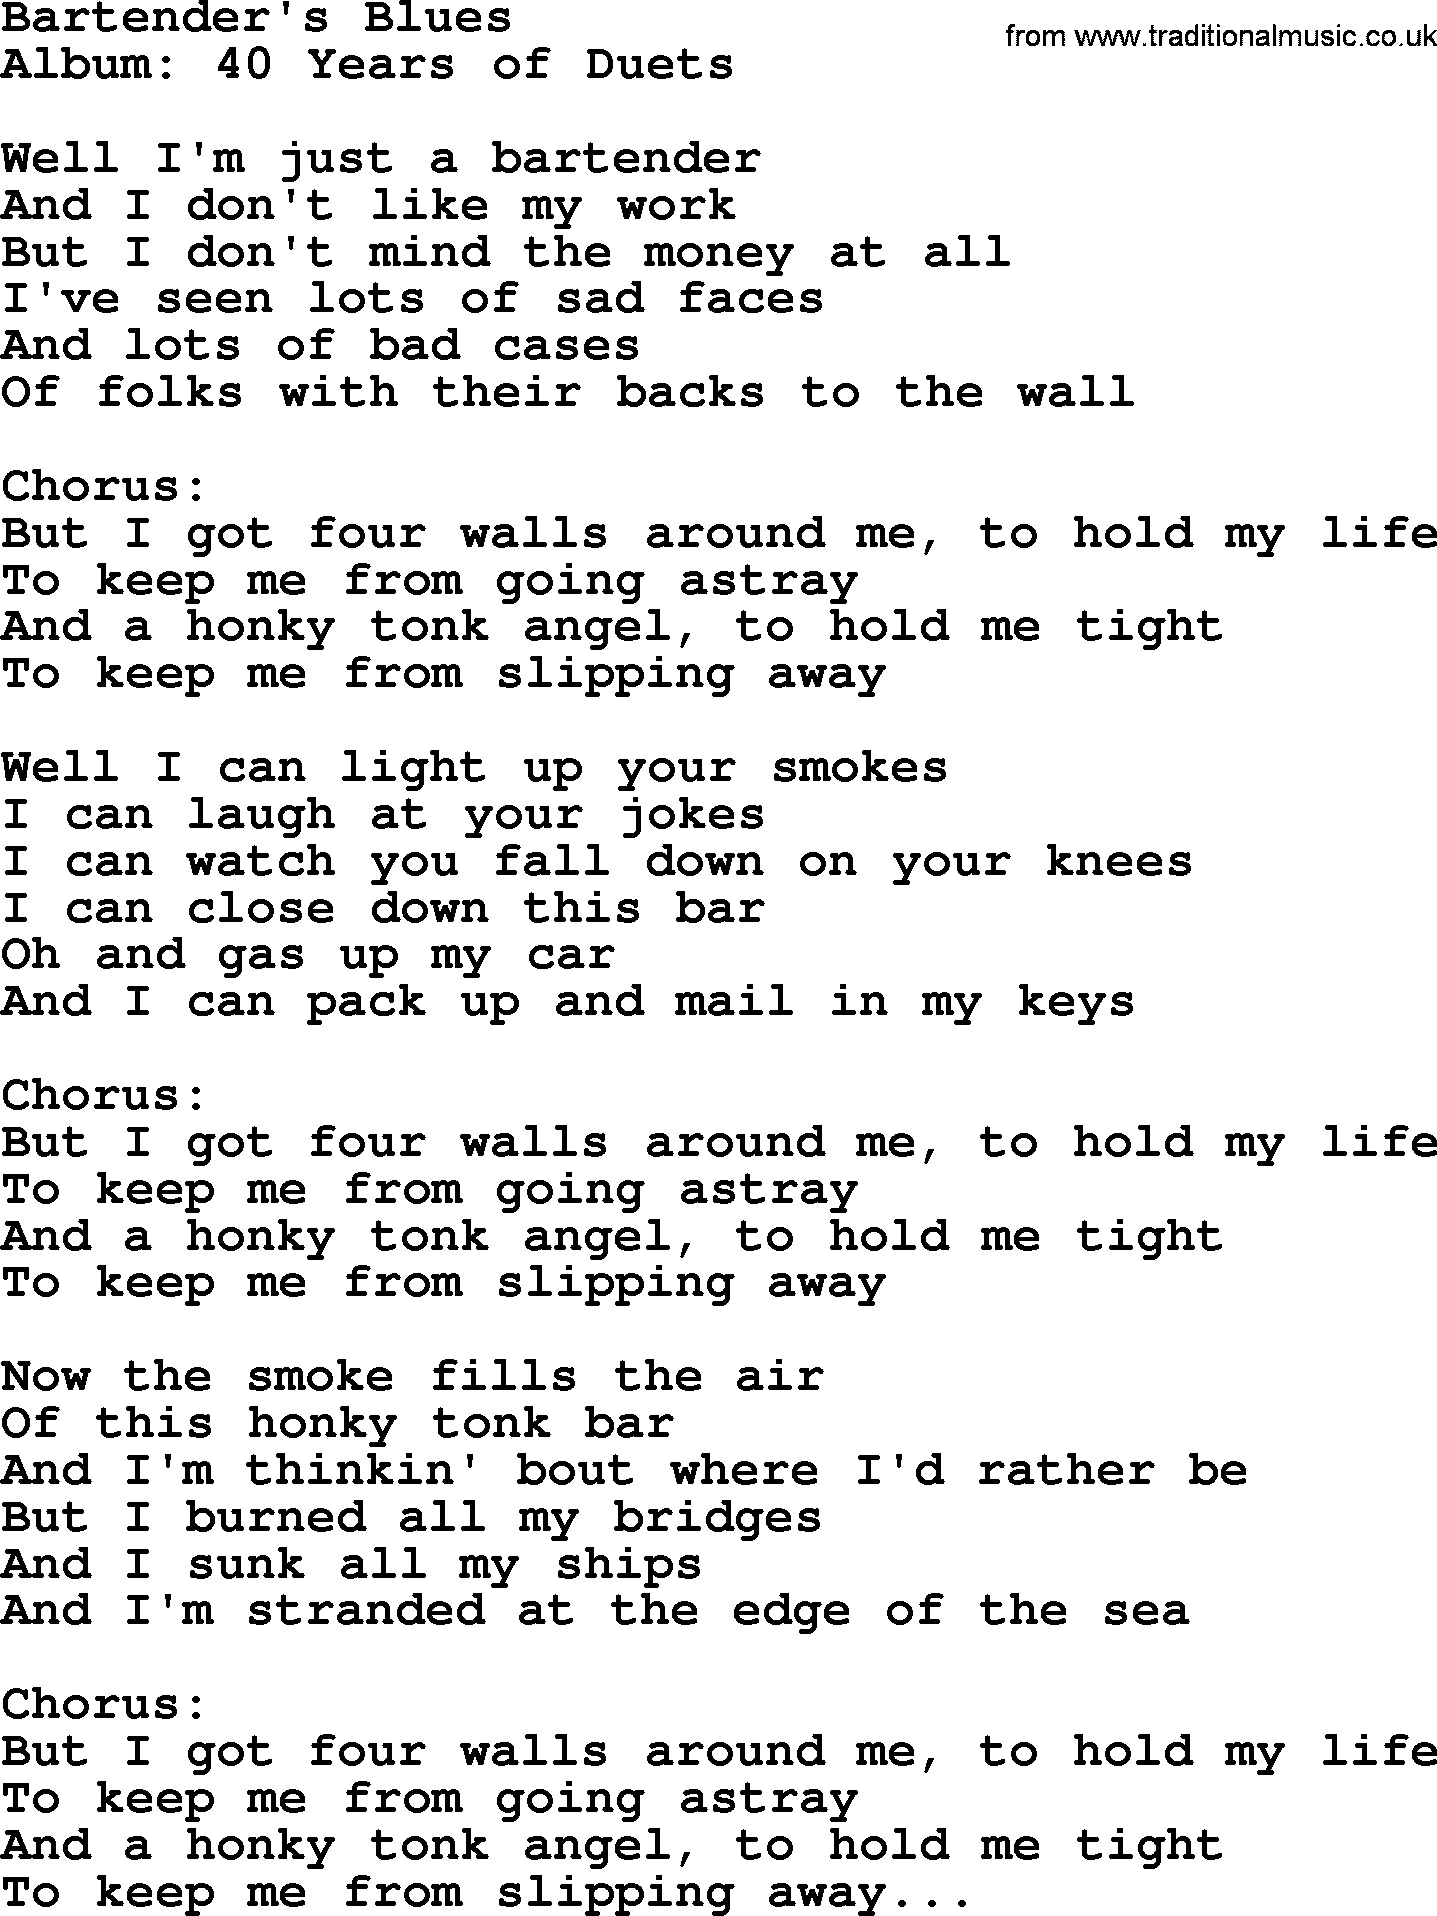 George Jones song: Bartender's Blues, lyrics